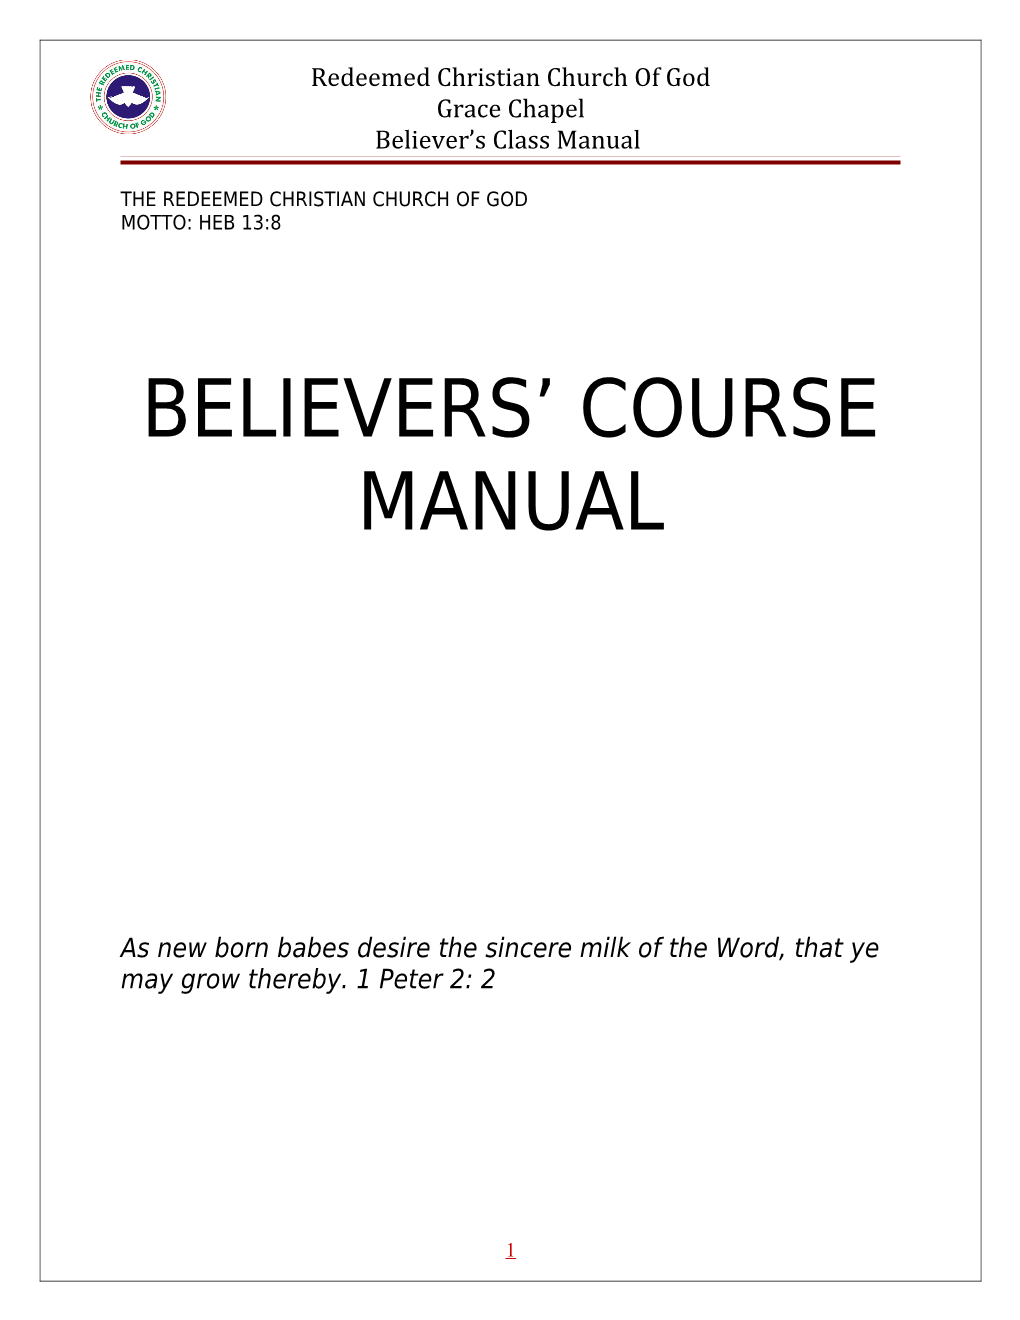 Redeem Christian Church of God Believer S Baptismal Class Manual